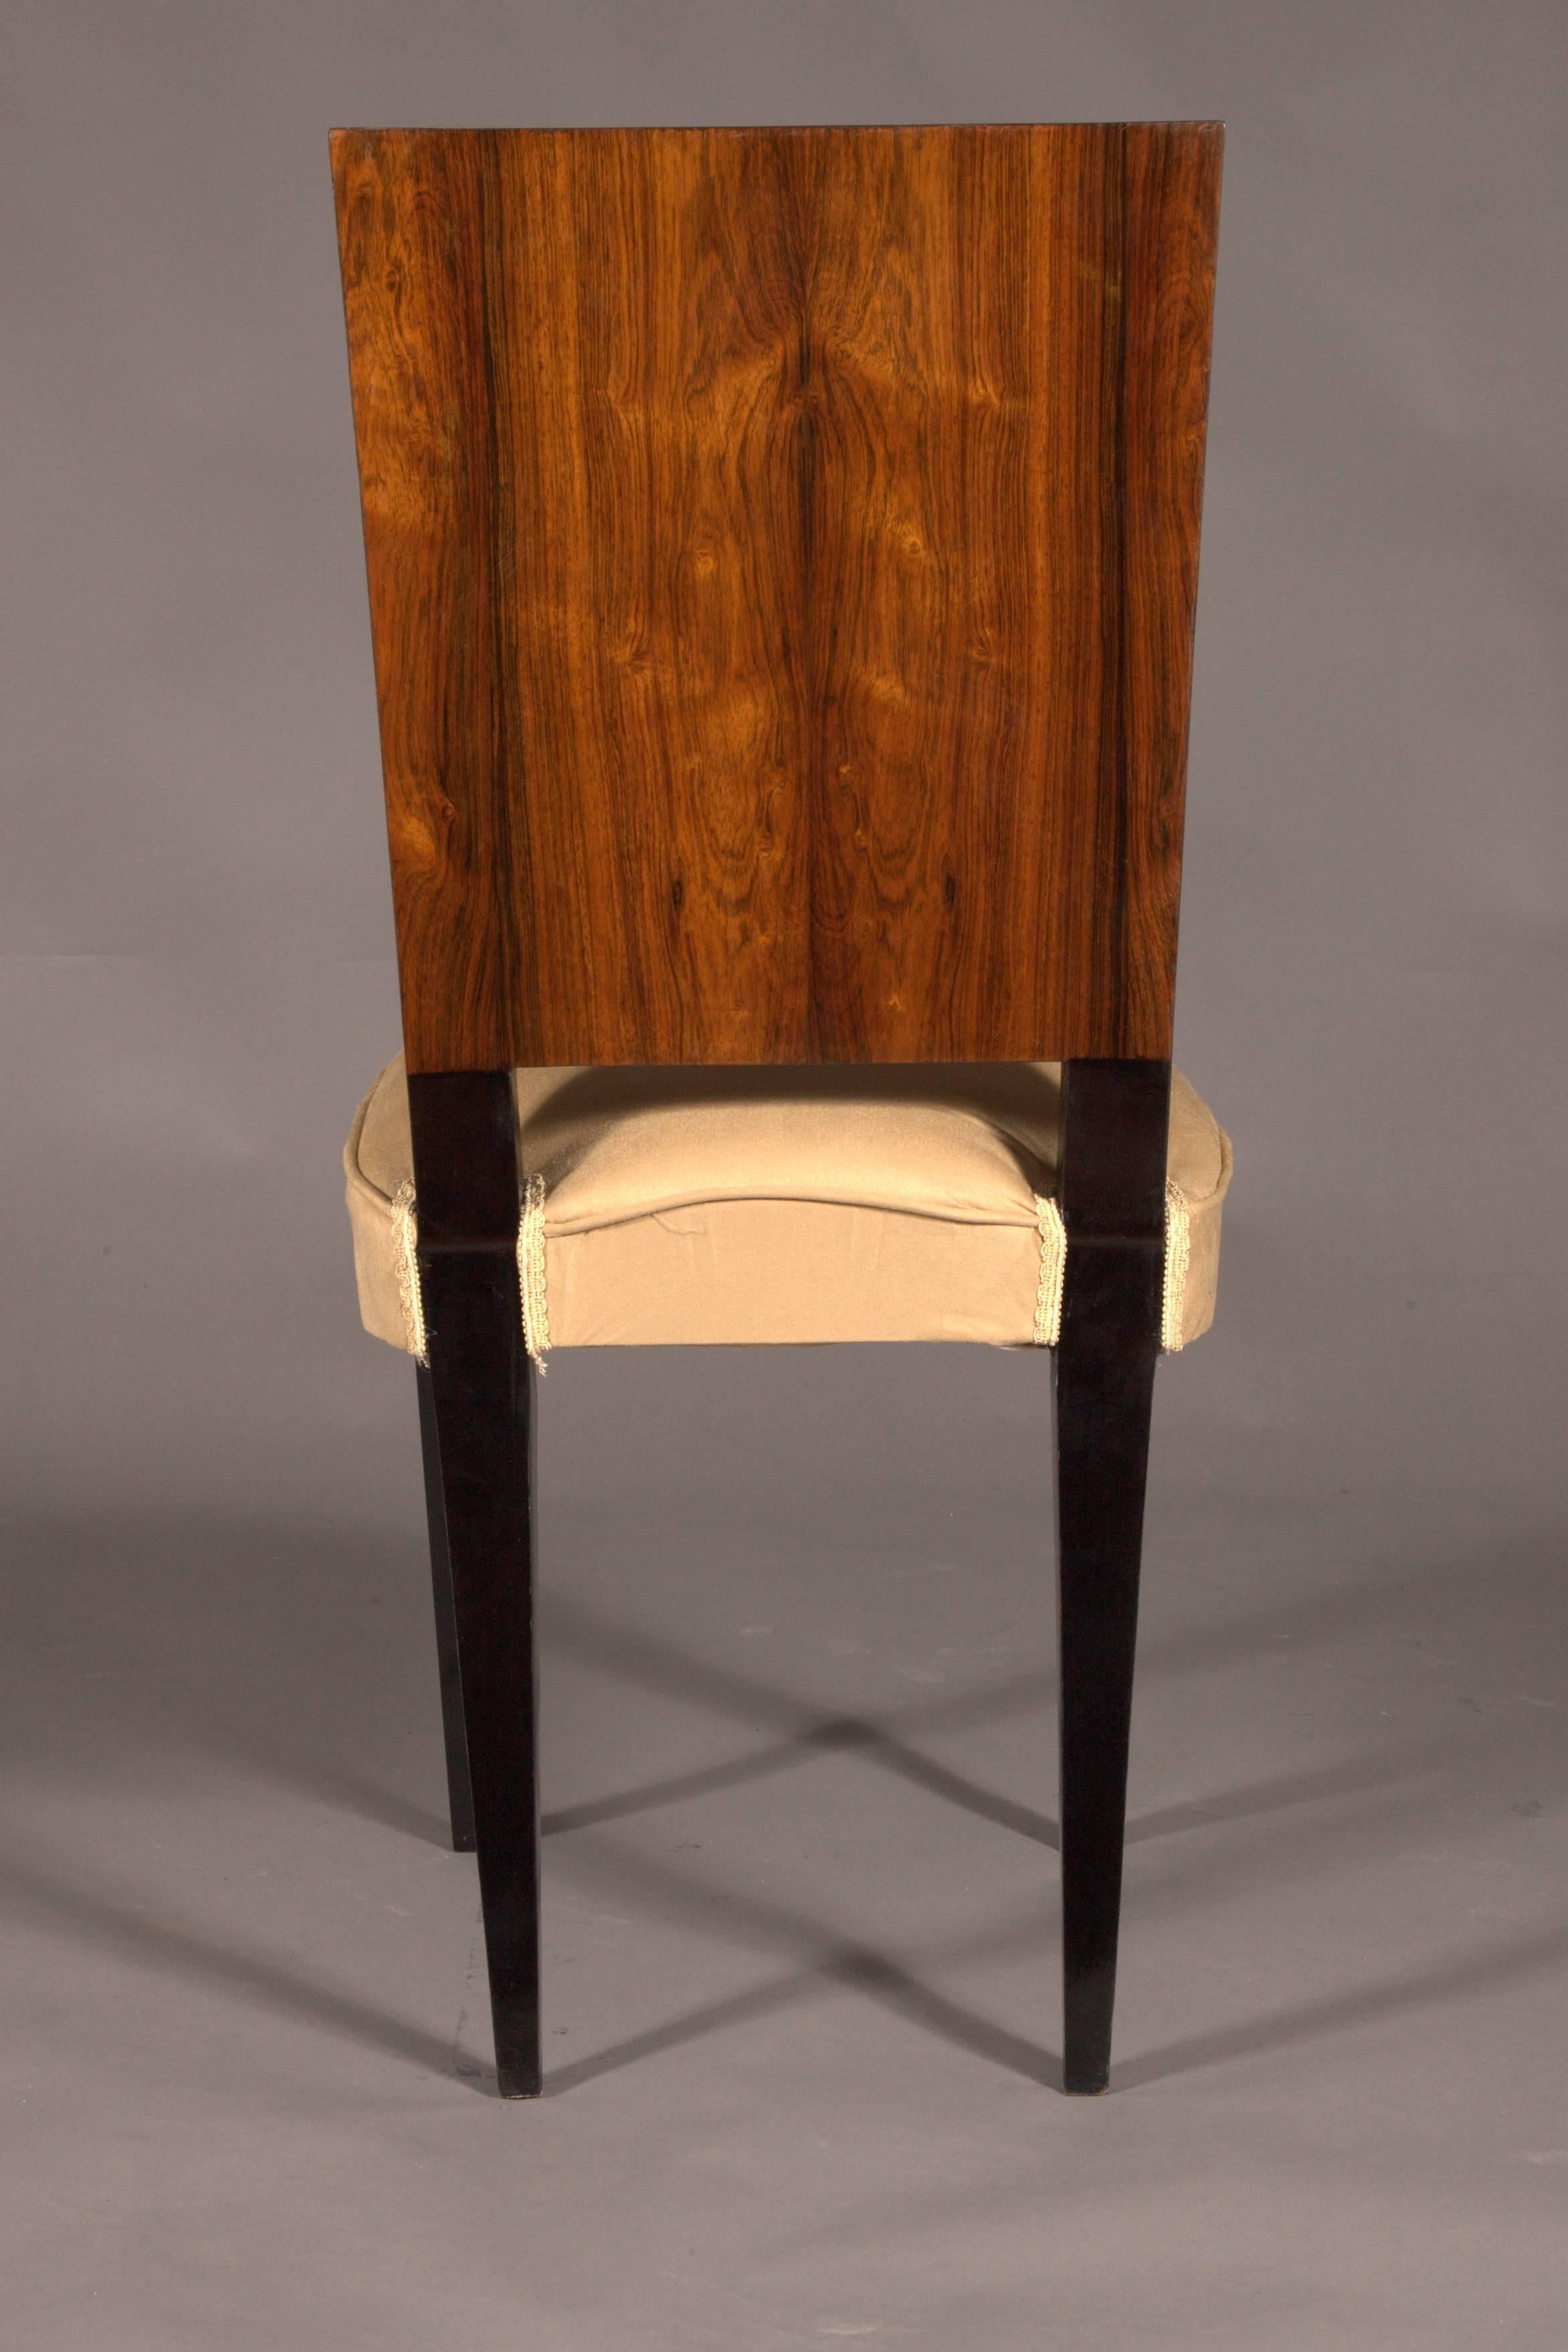 20th Century two Elegant Chair in antique Art Deco Style classic Mahogany Veneer